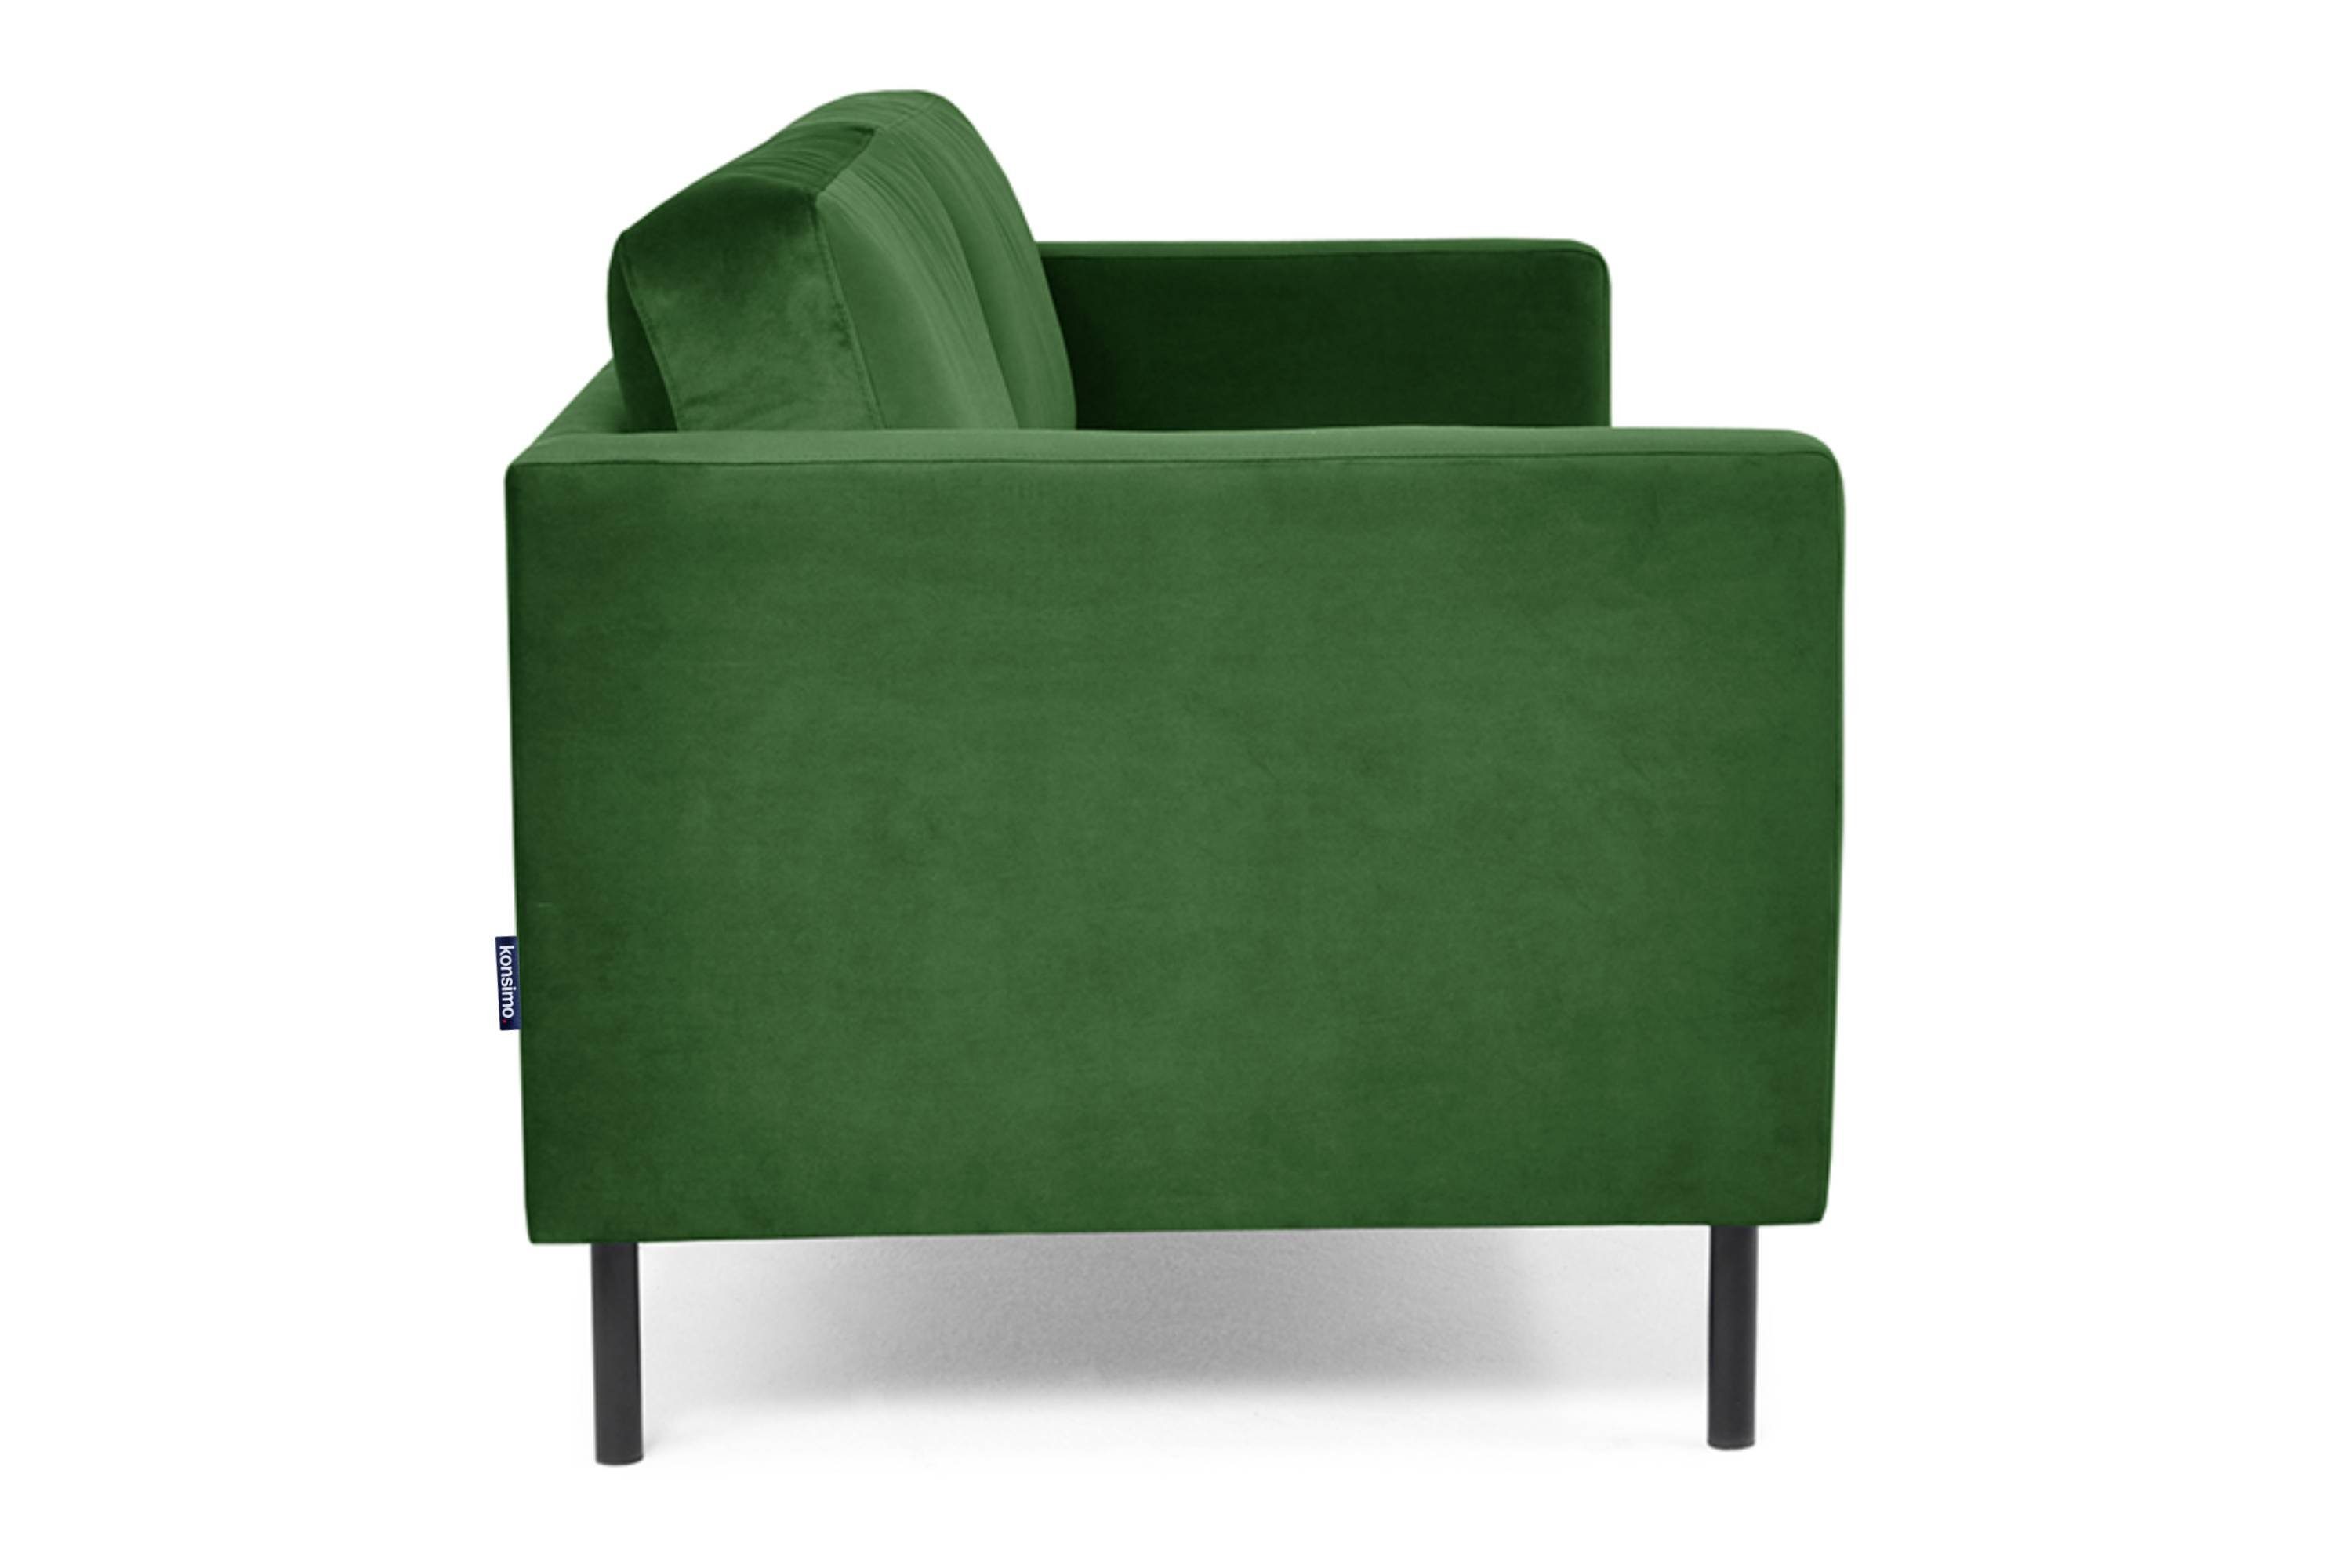 | hohe 2,5-Sitzer grün universelles | Sofa, Konsimo grün Design grün Beine, TOZZI